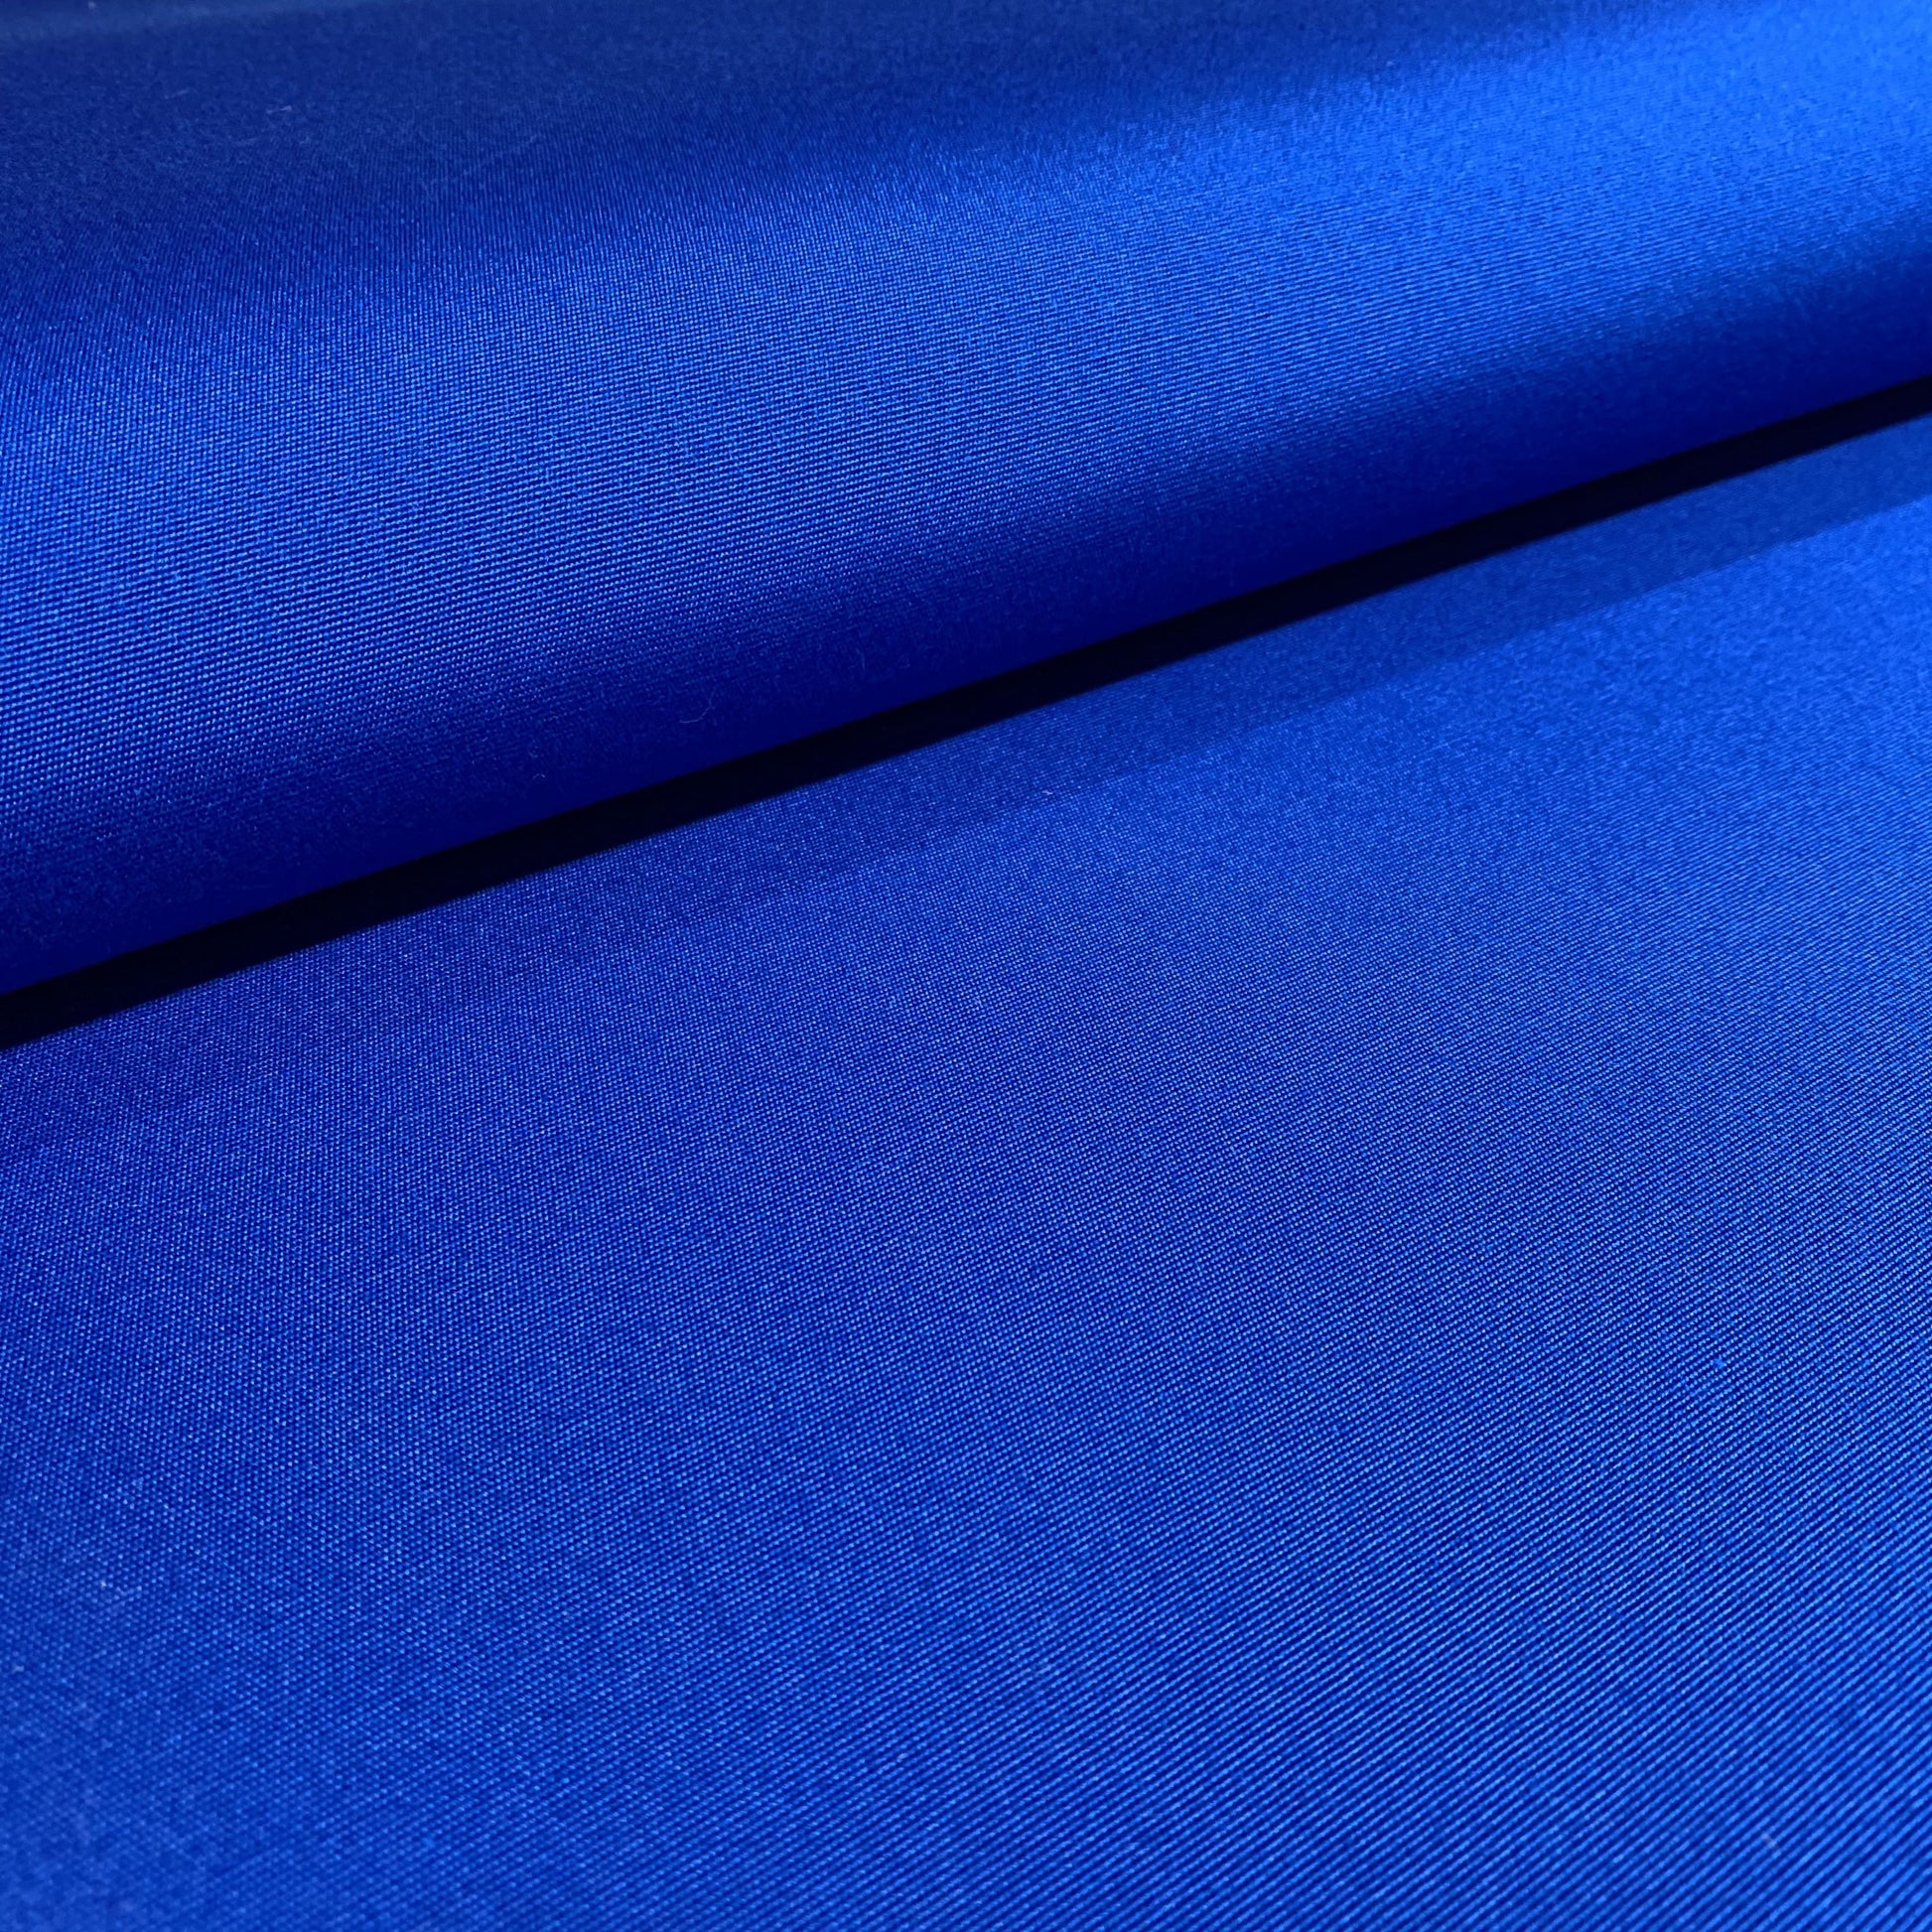 Premium Blue Solid Acrylic Fabric